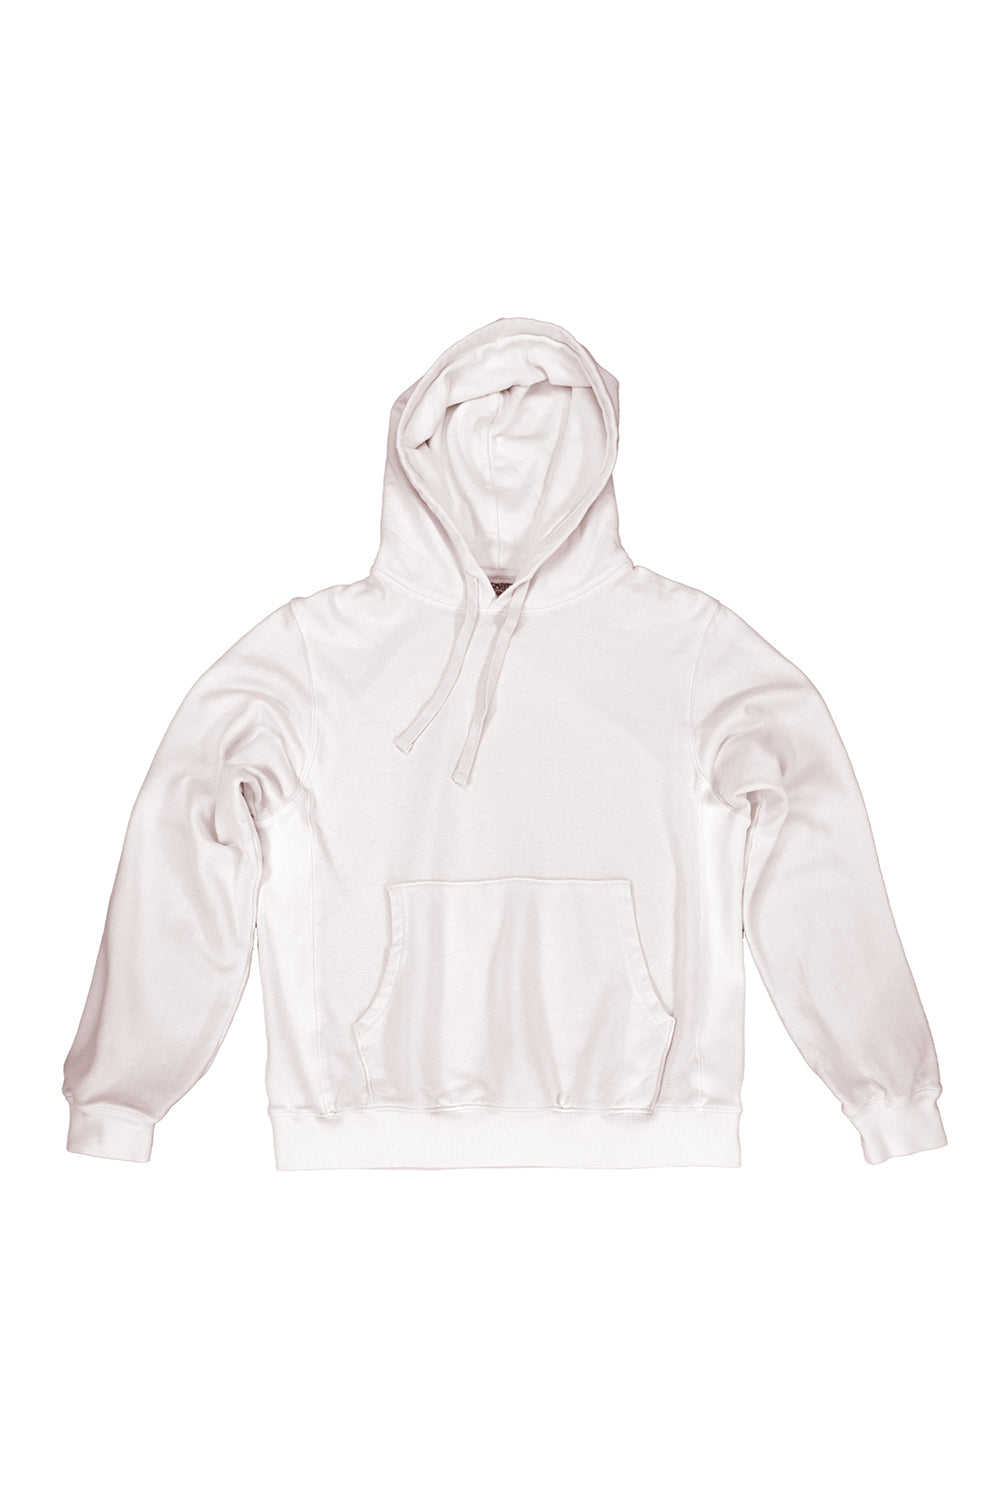 Montauk Hooded Sweatshirt | Jungmaven Hemp Clothing & Accessories / Color: Washed White